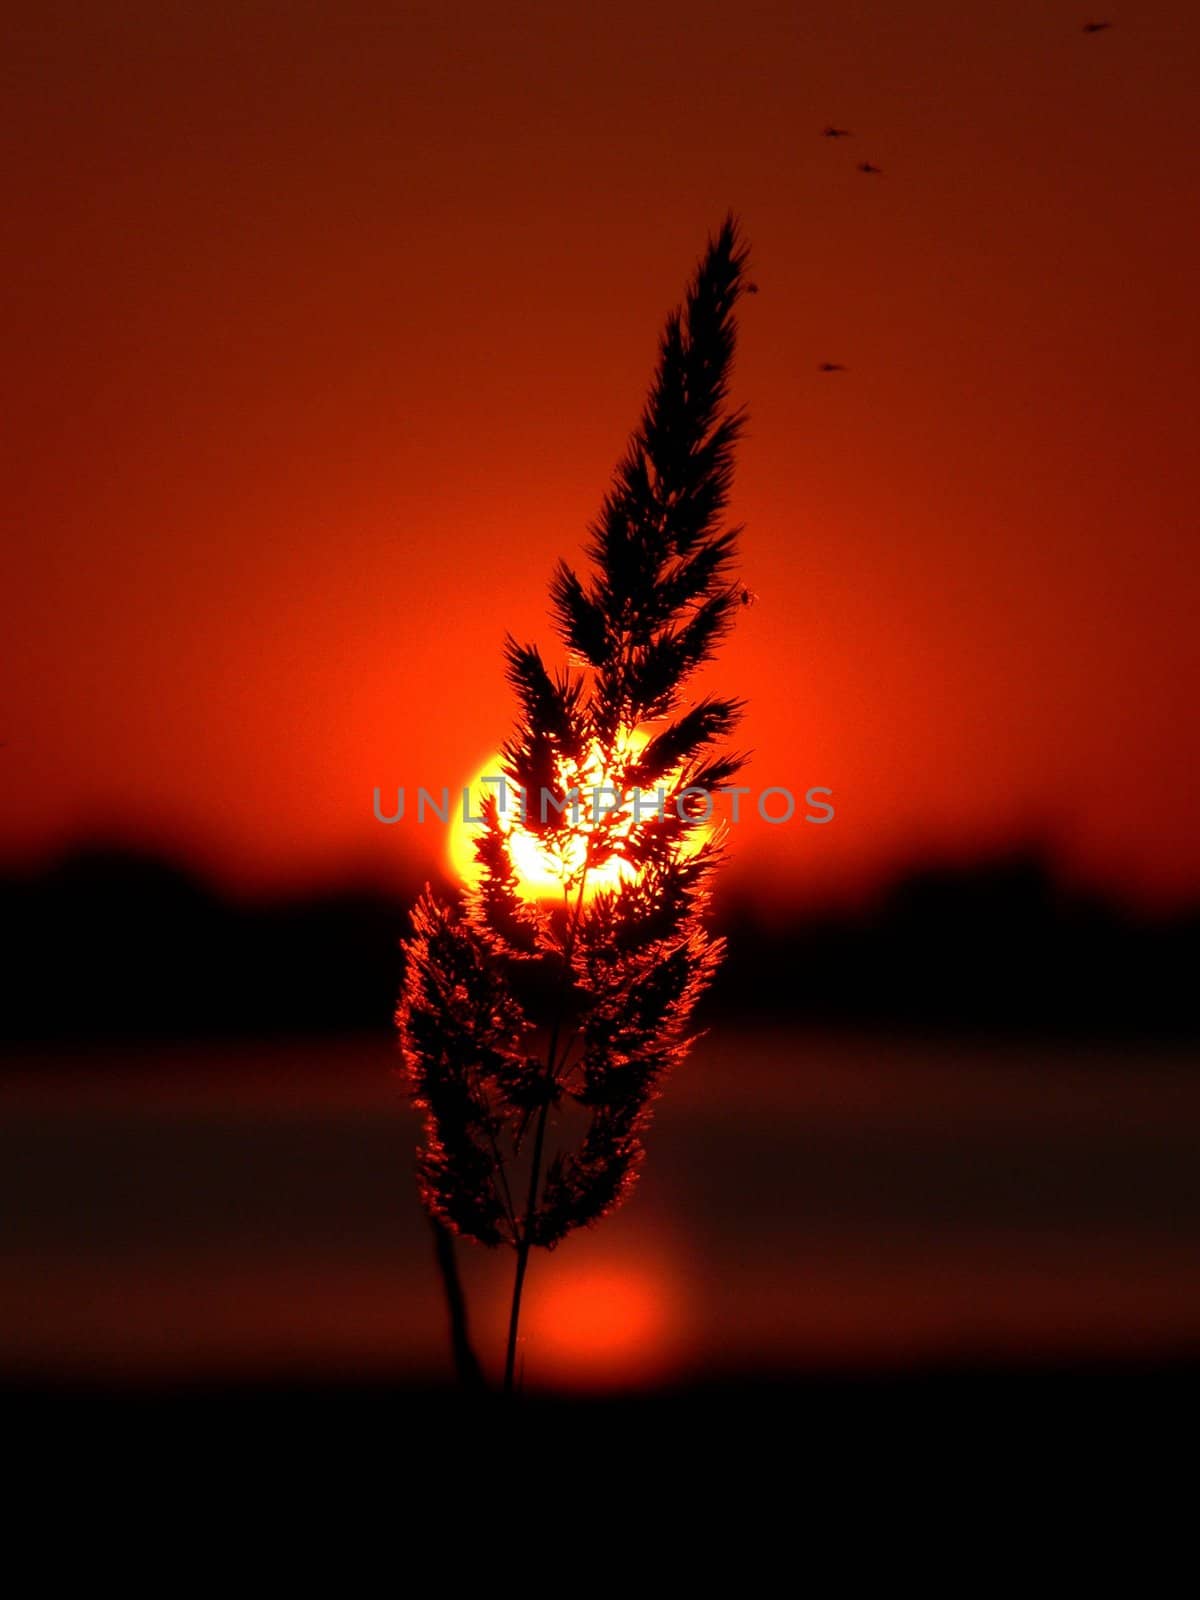 Blade of grass on sunset